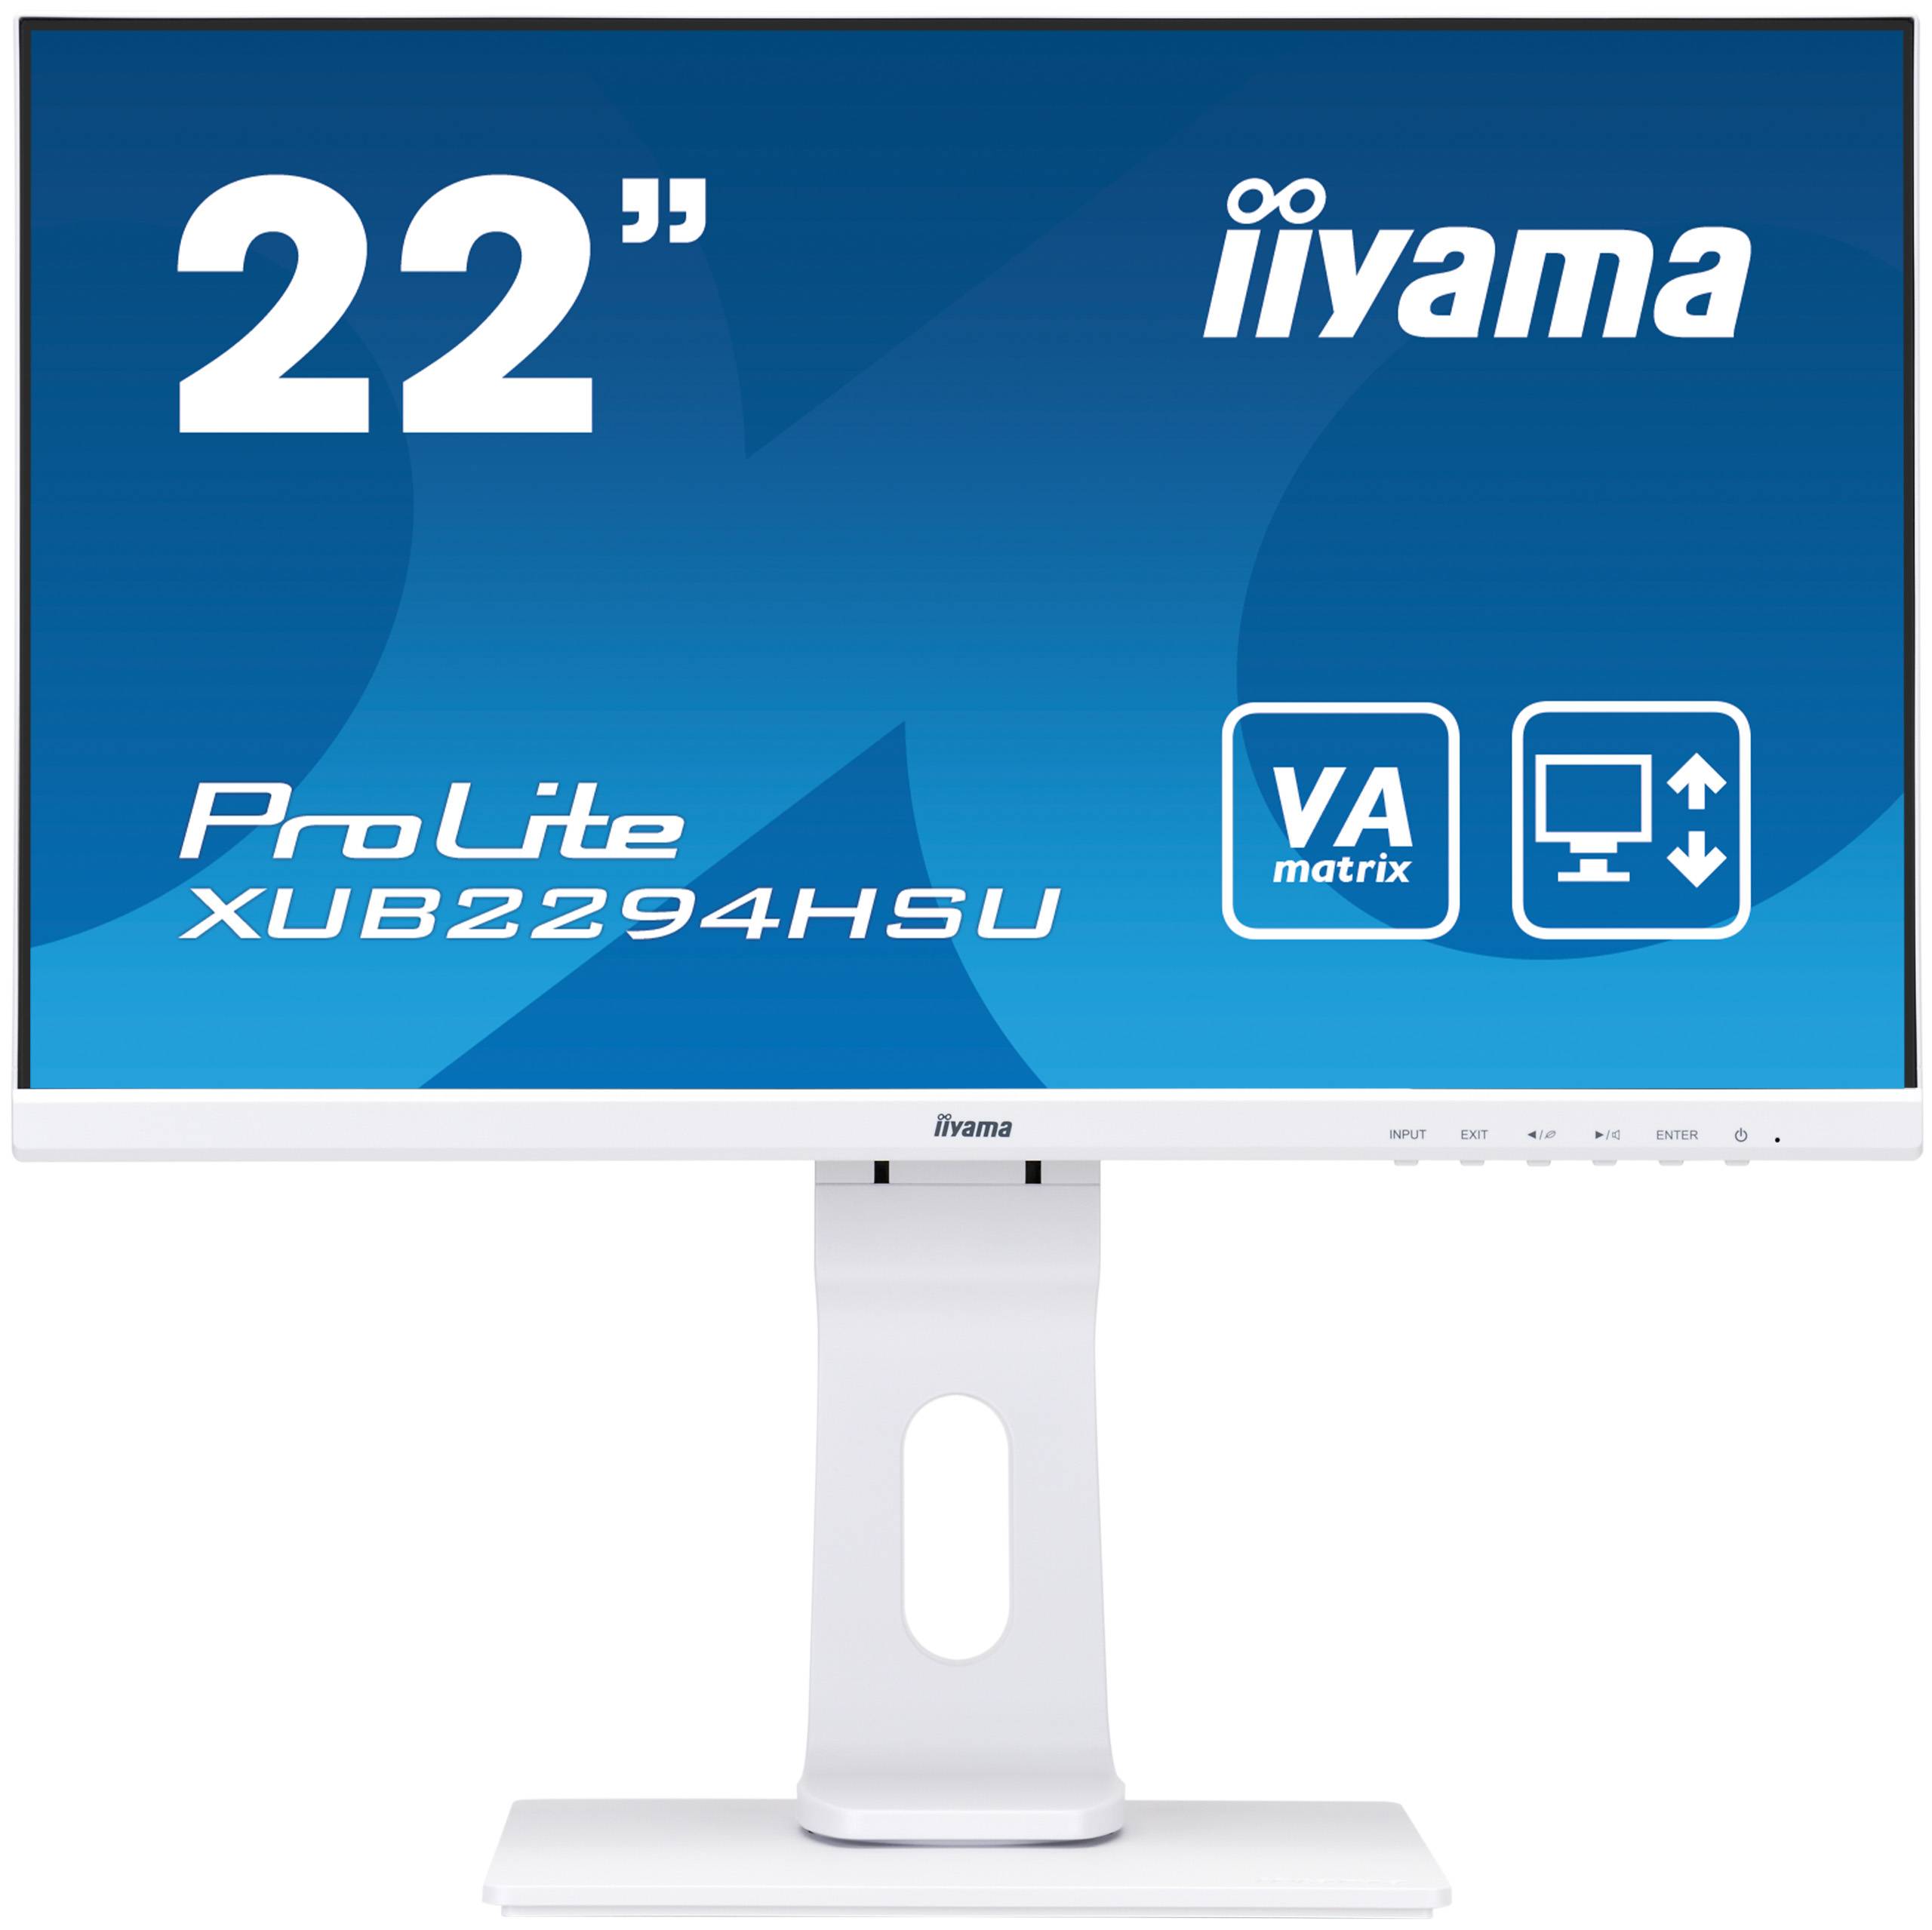 Rca Informatique - Image du produit : XUB2294HSU-W1 3000:1 VGA HDMI 215IN LCD 1920 X 1080 16:9 4MS